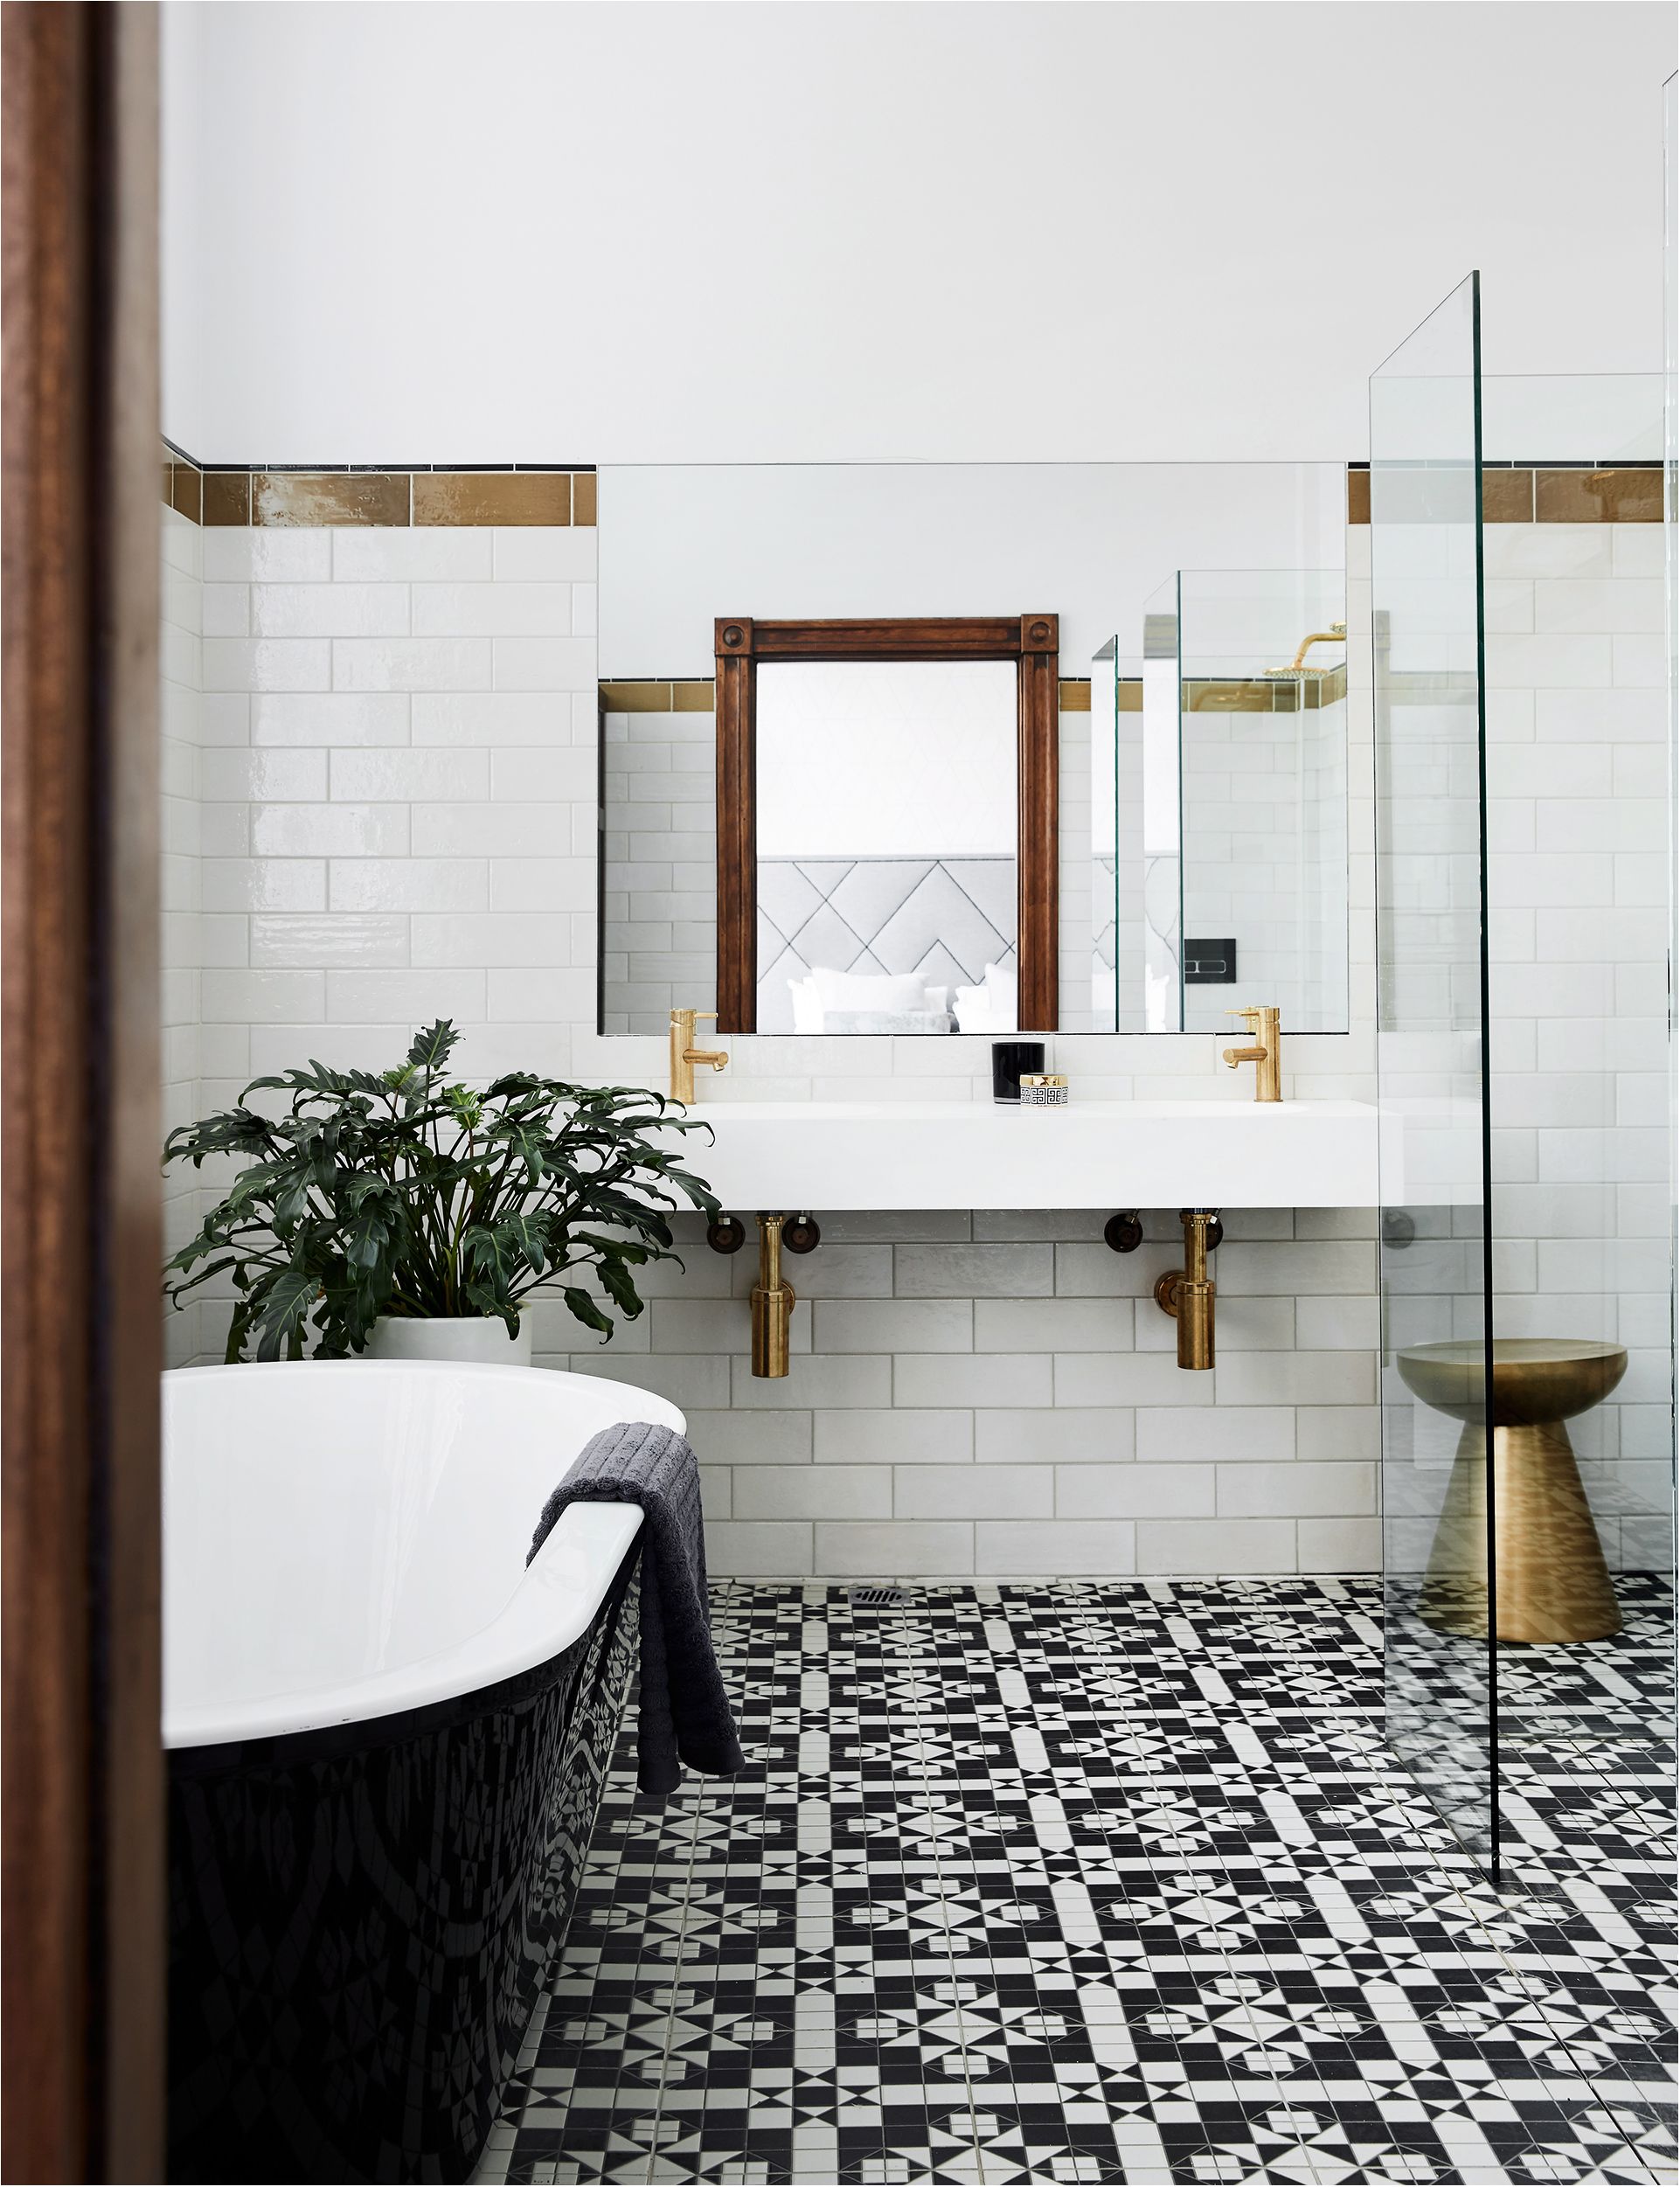 img/bathroom-tile-trends-2020-uk.jpg